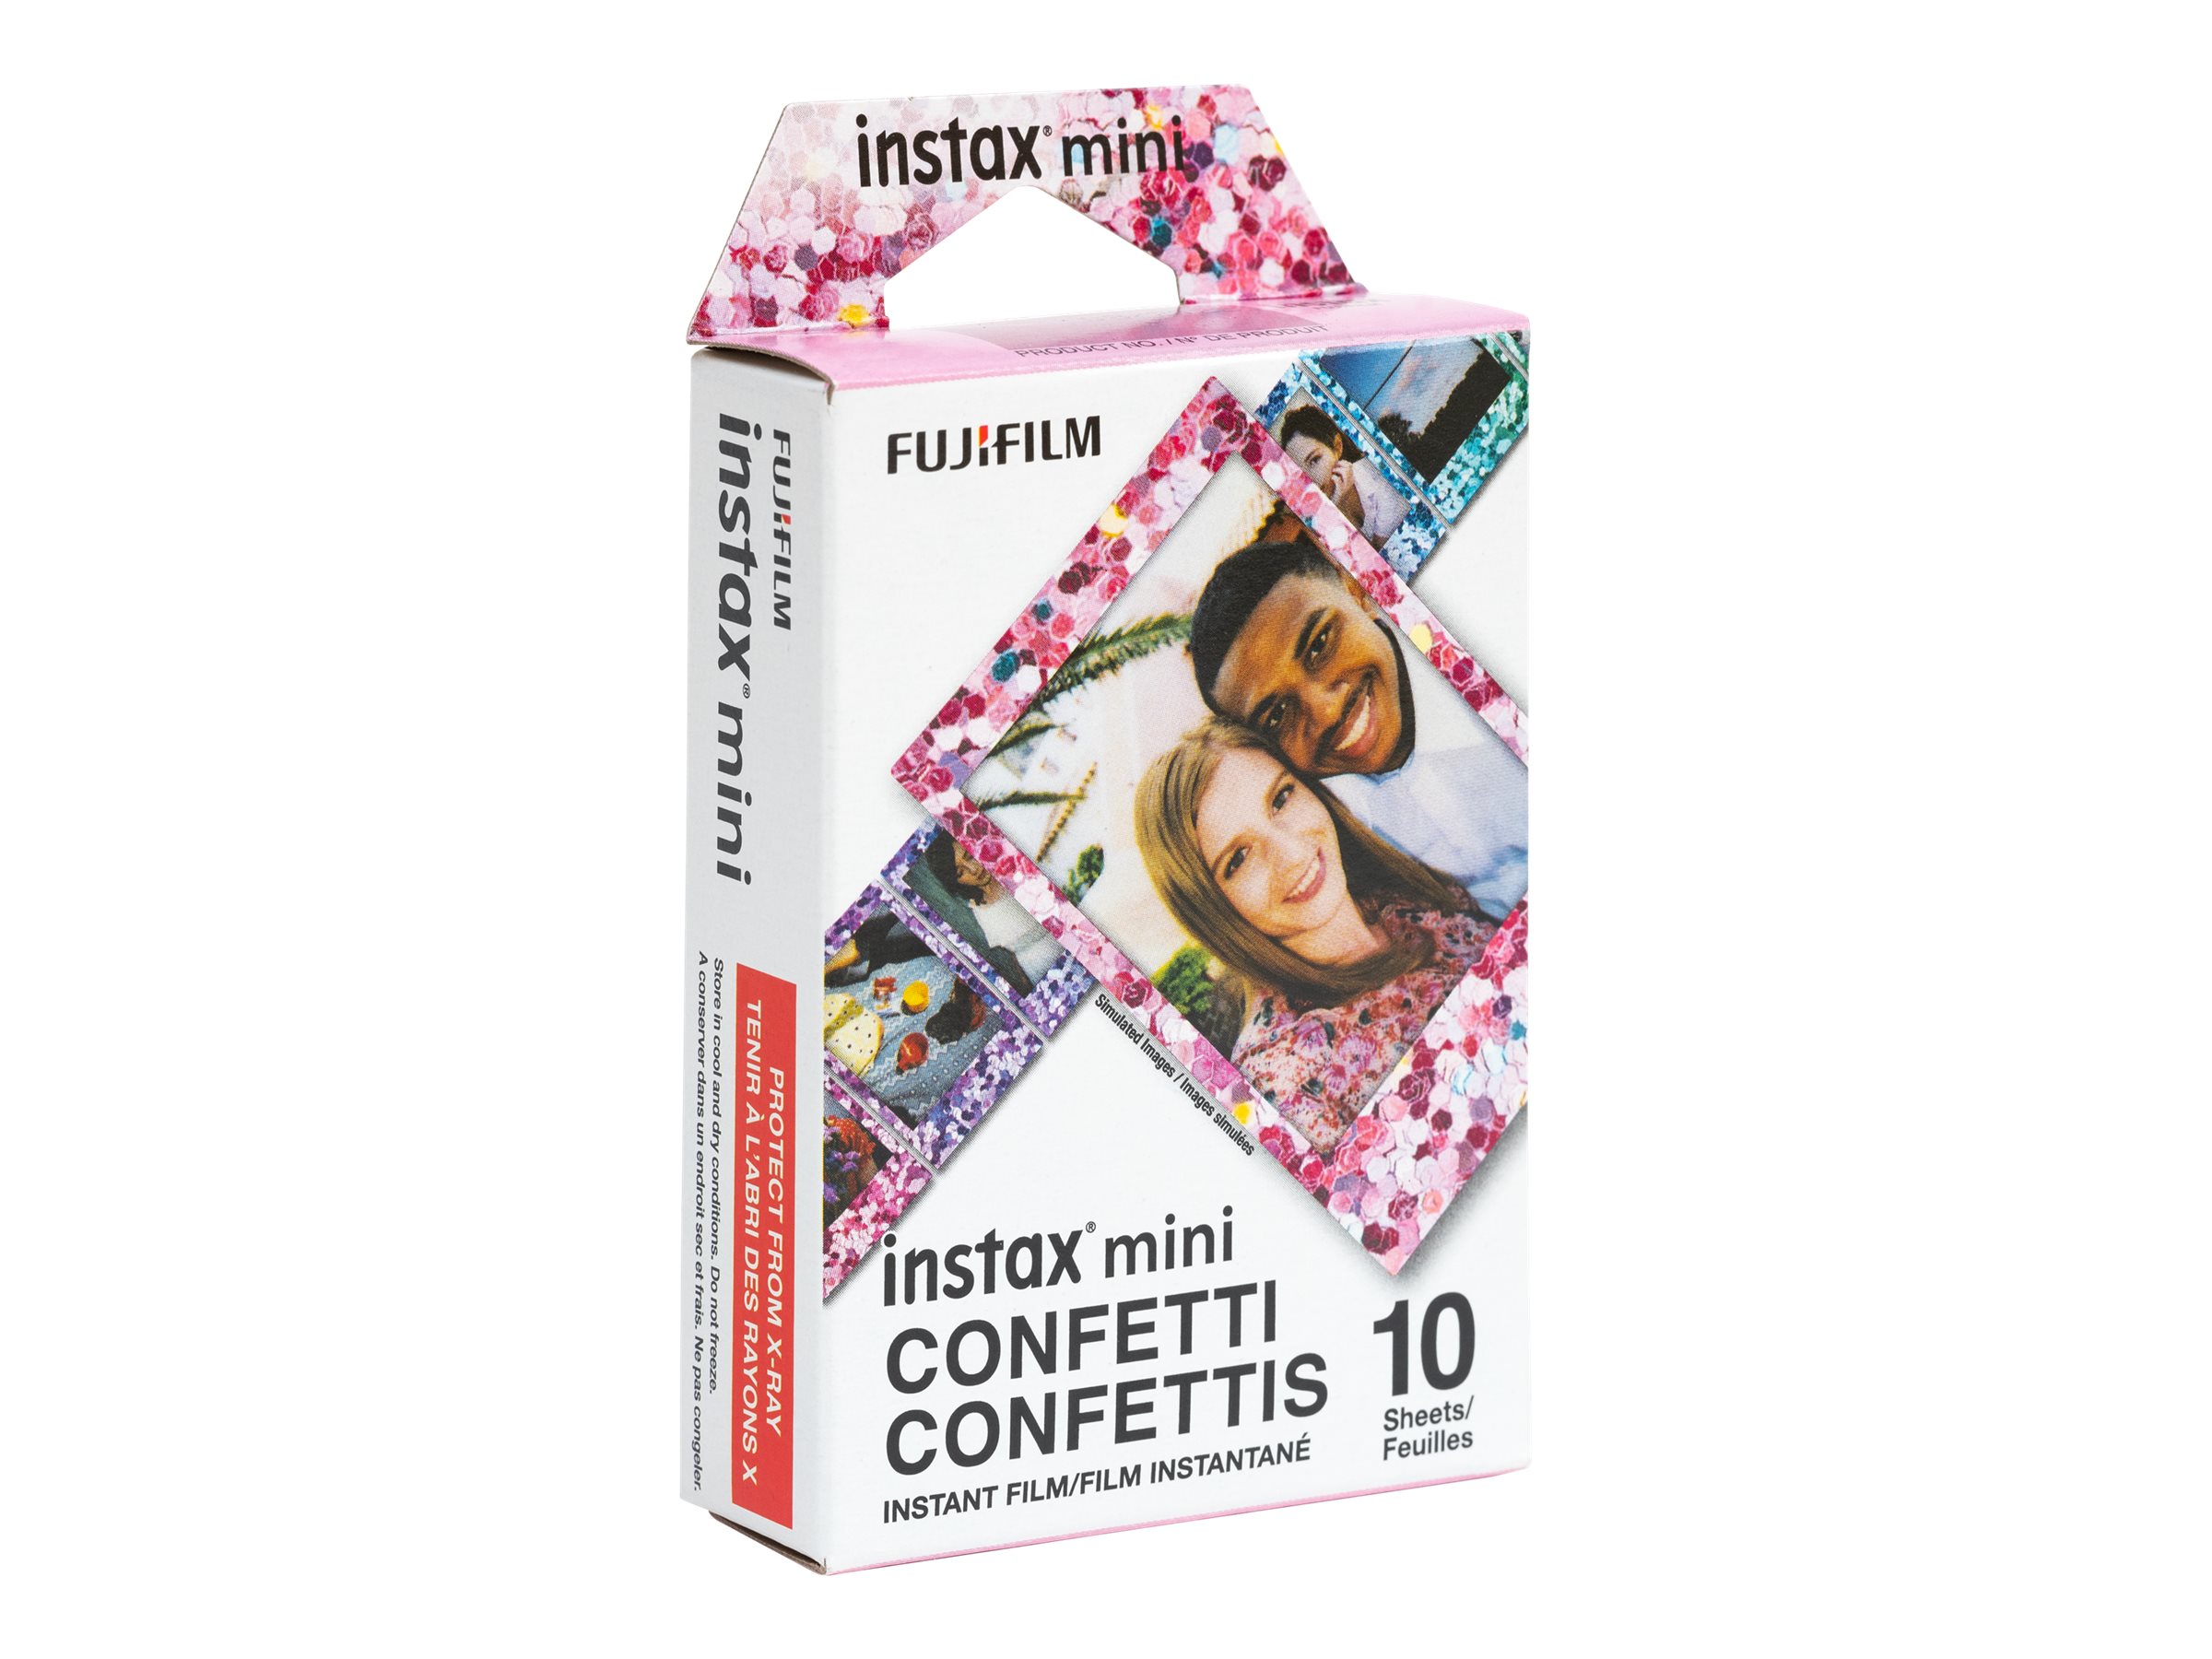 INSTAX MINI FILM CONFETTI - 10 EXPOSURE